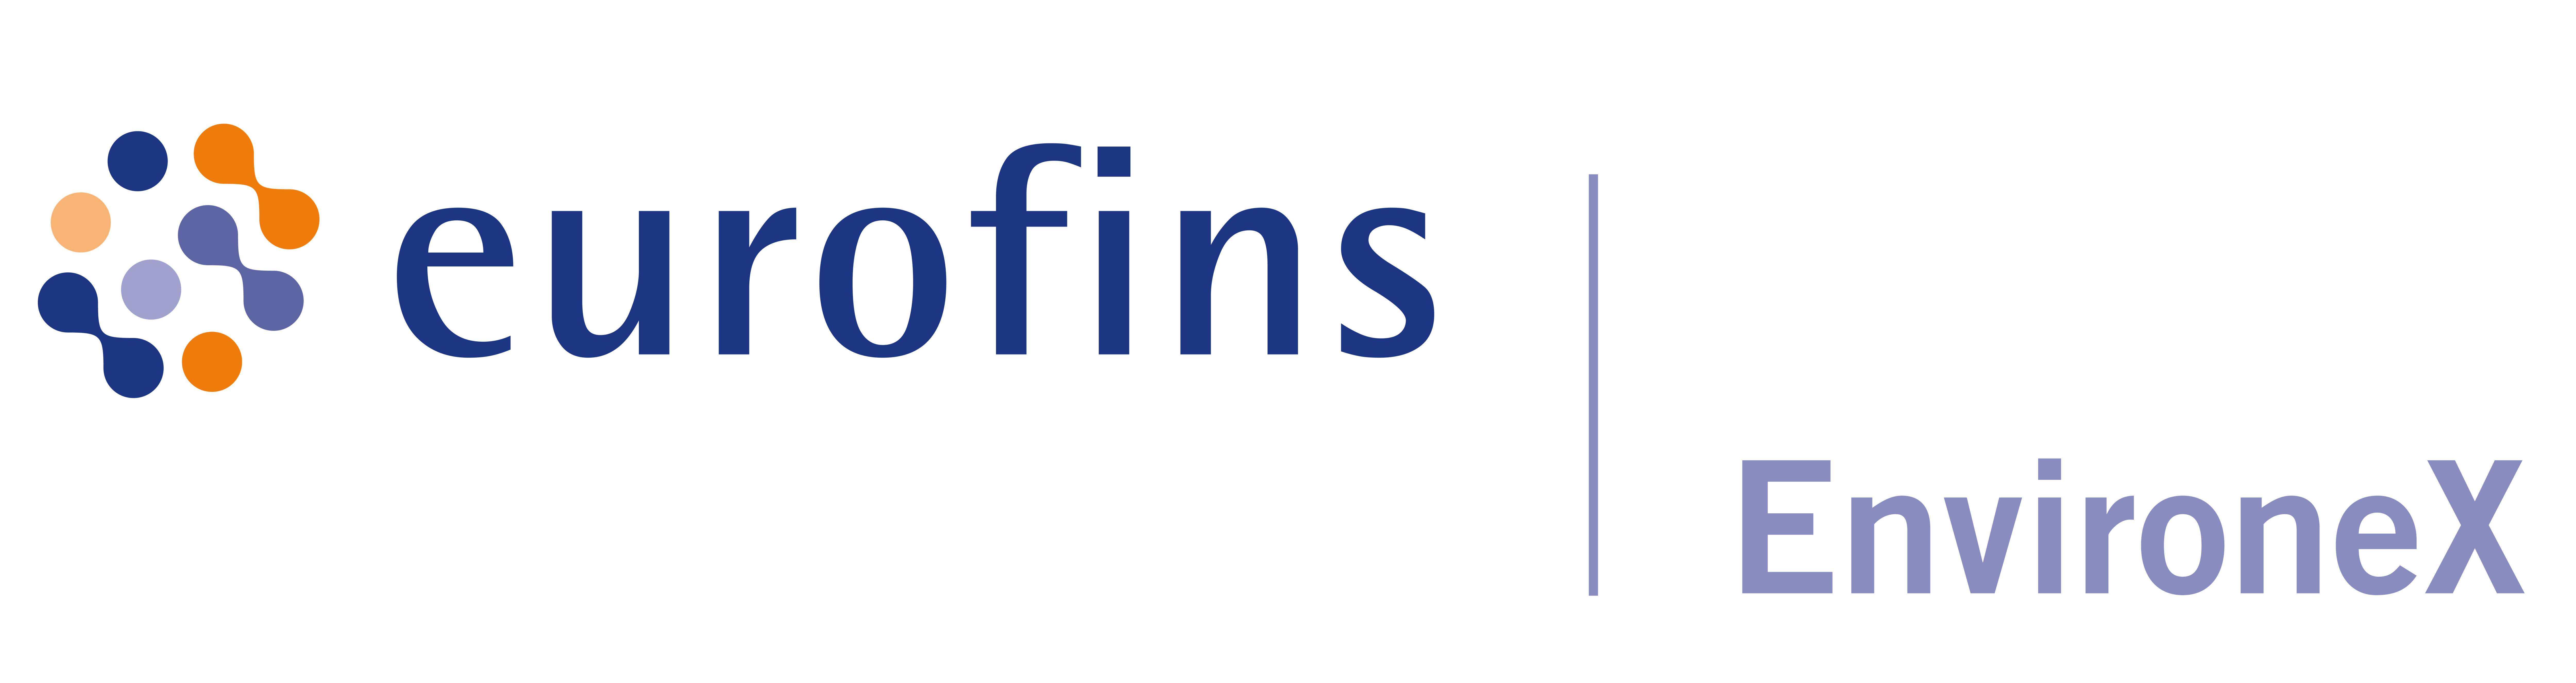 Environex Eurofins Inc. logo